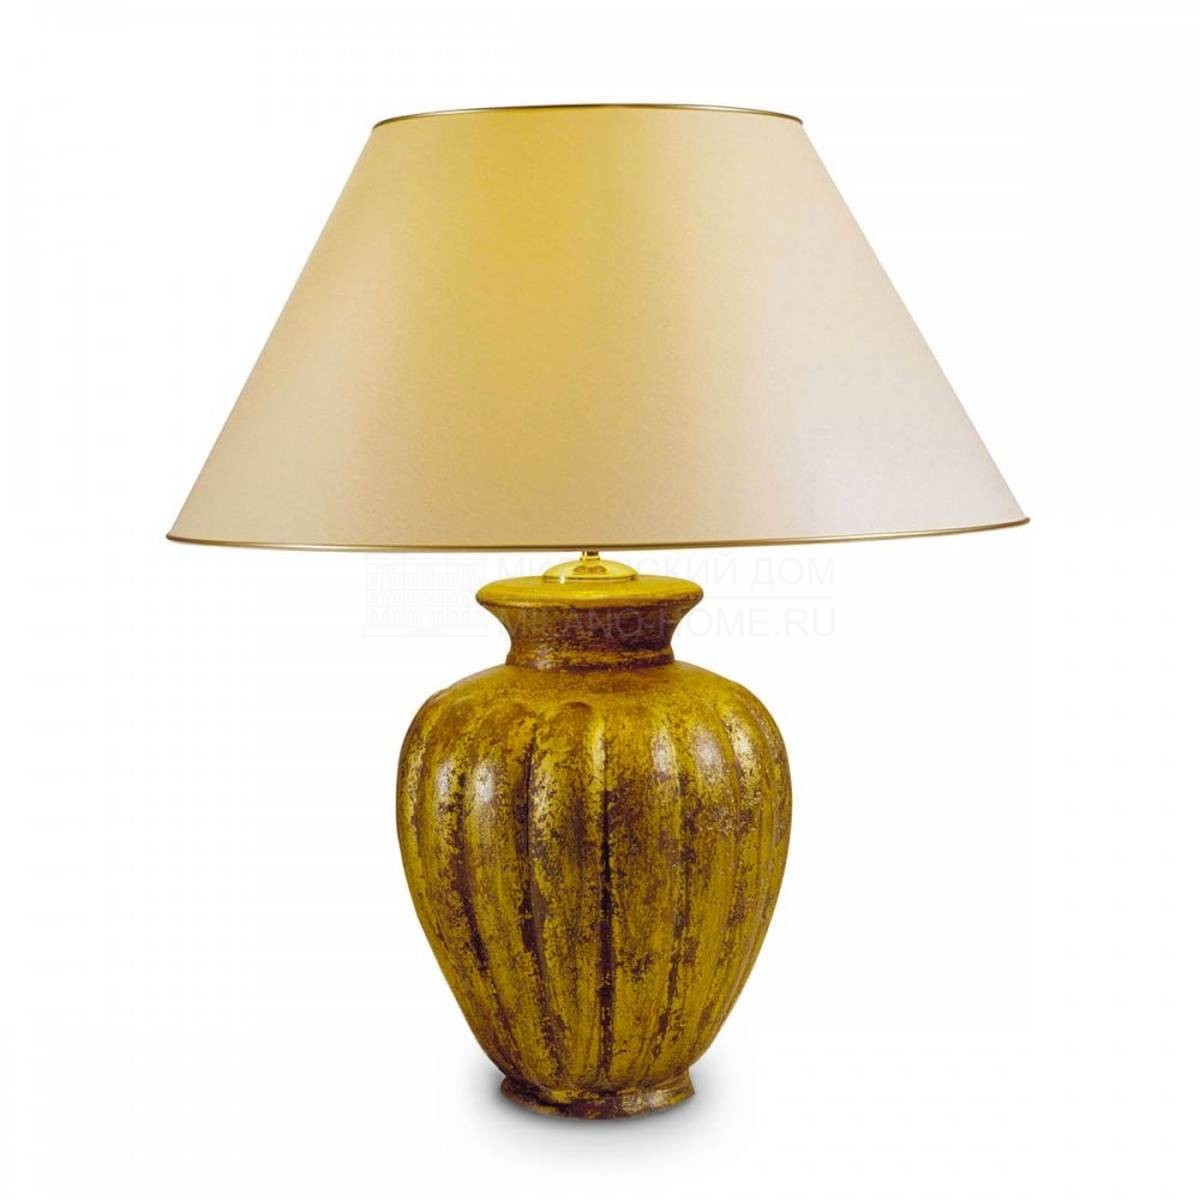 Настольная лампа Guelfa table lamp из Италии фабрики MARIONI